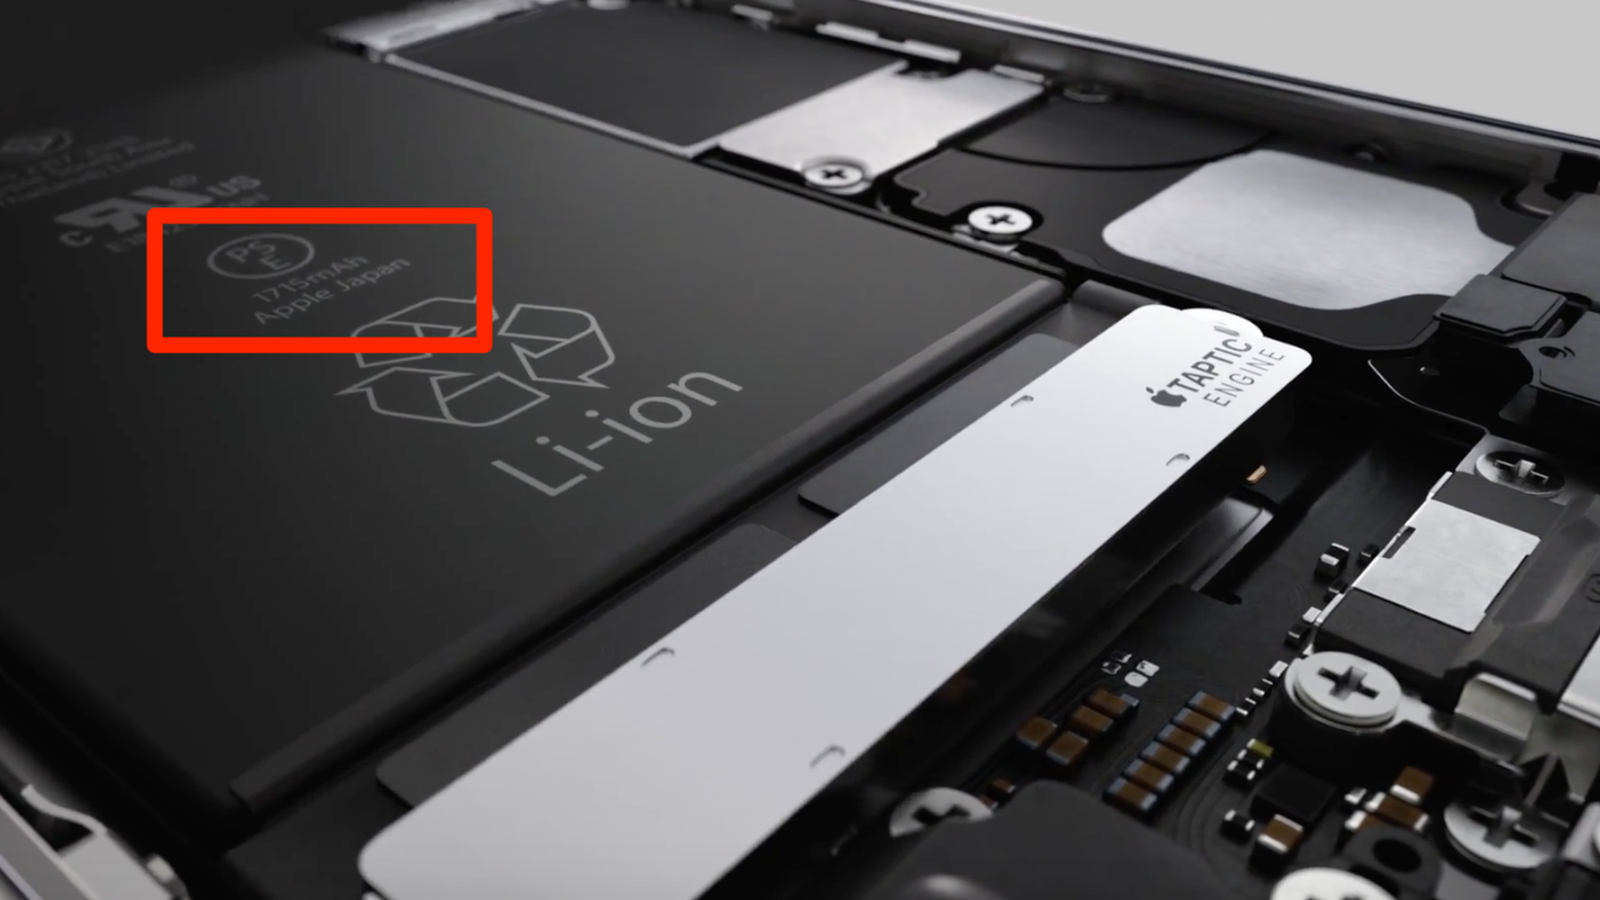 Terminal lejesoldat Gør gulvet rent Apple's 3D Touch Video Confirms 1715 mAh iPhone 6s Battery - MacRumors